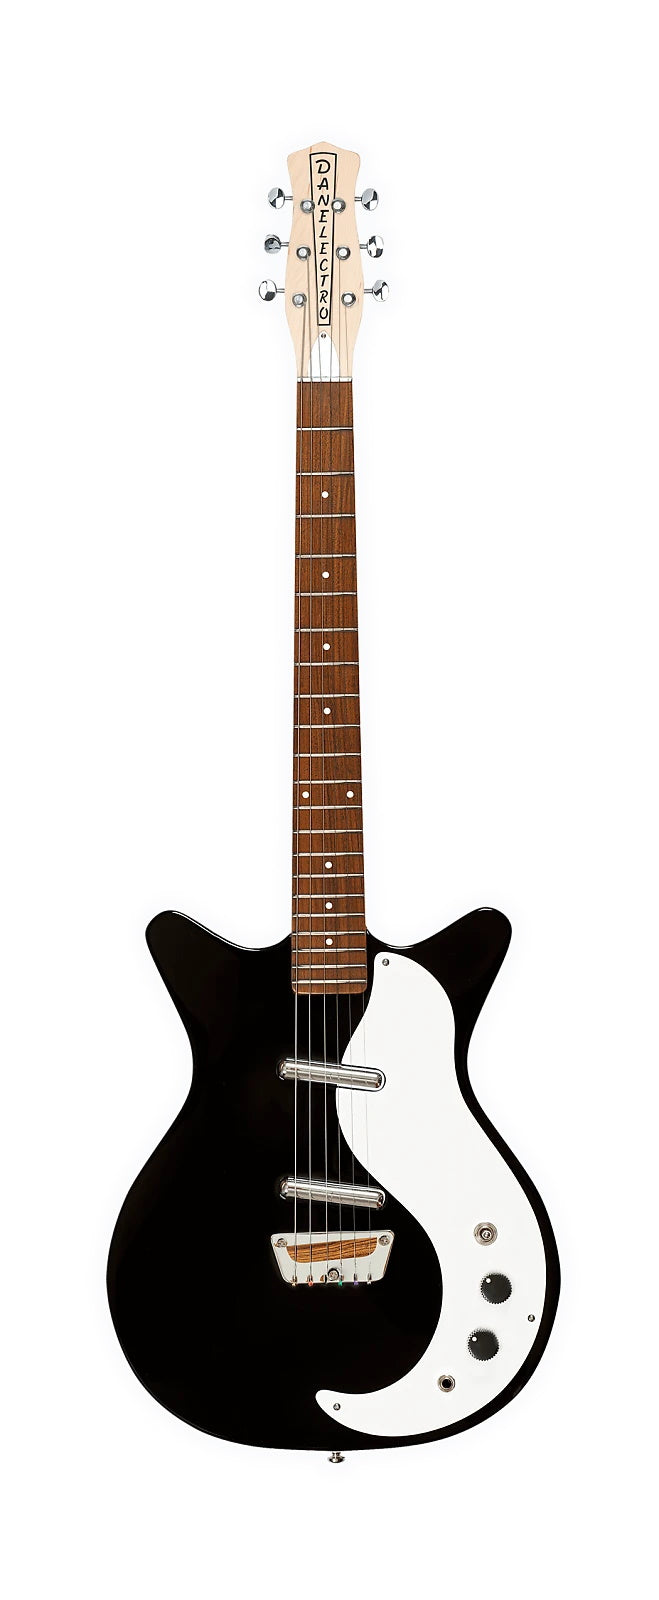 Danelectro Stock '59 Black Electric Guitar